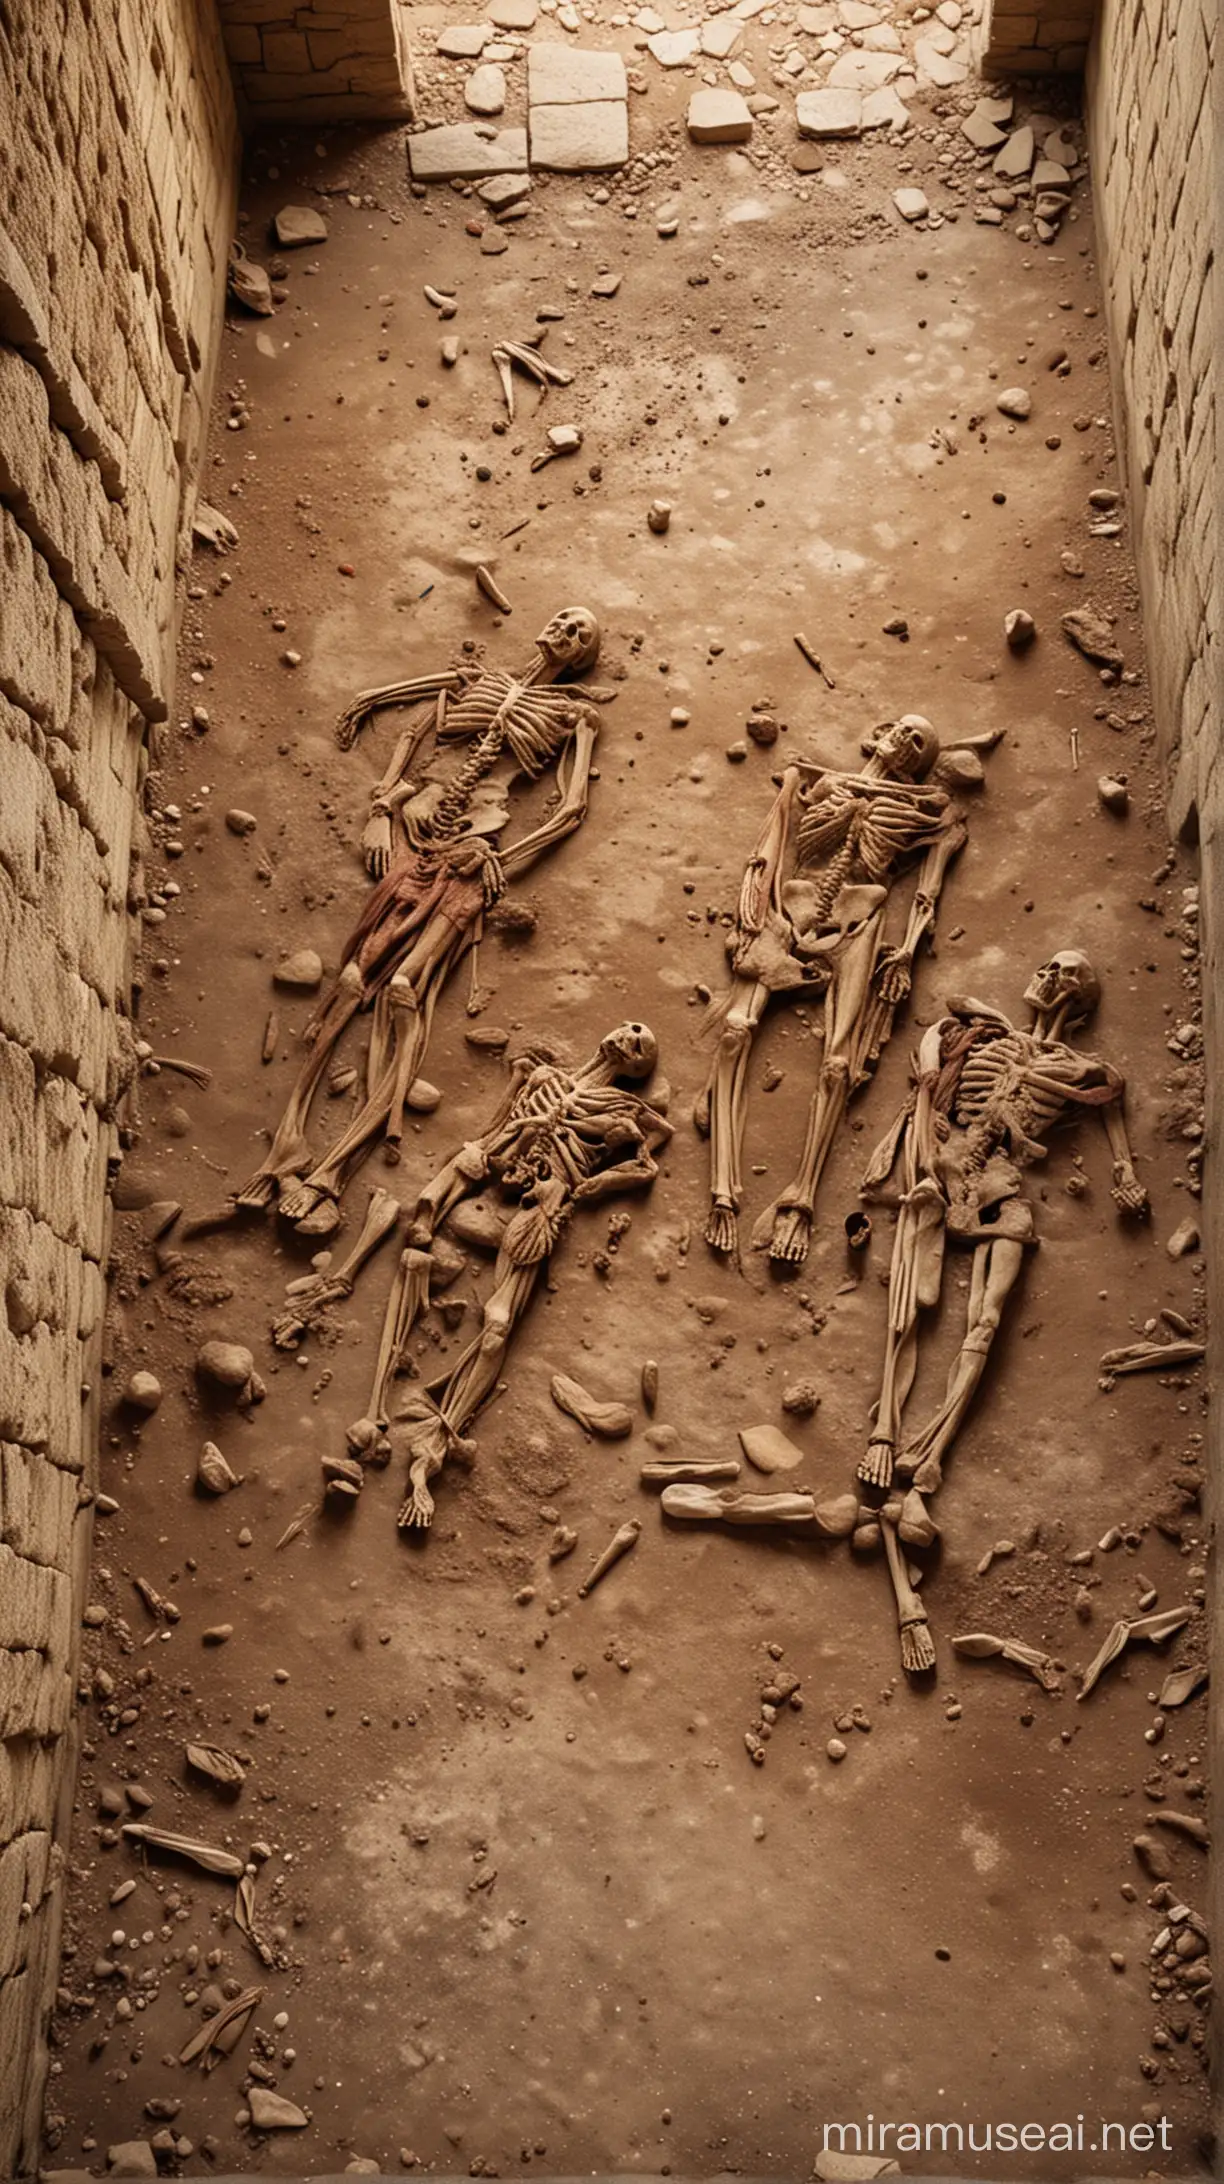 Ancient World Scene with Fallen Bodies